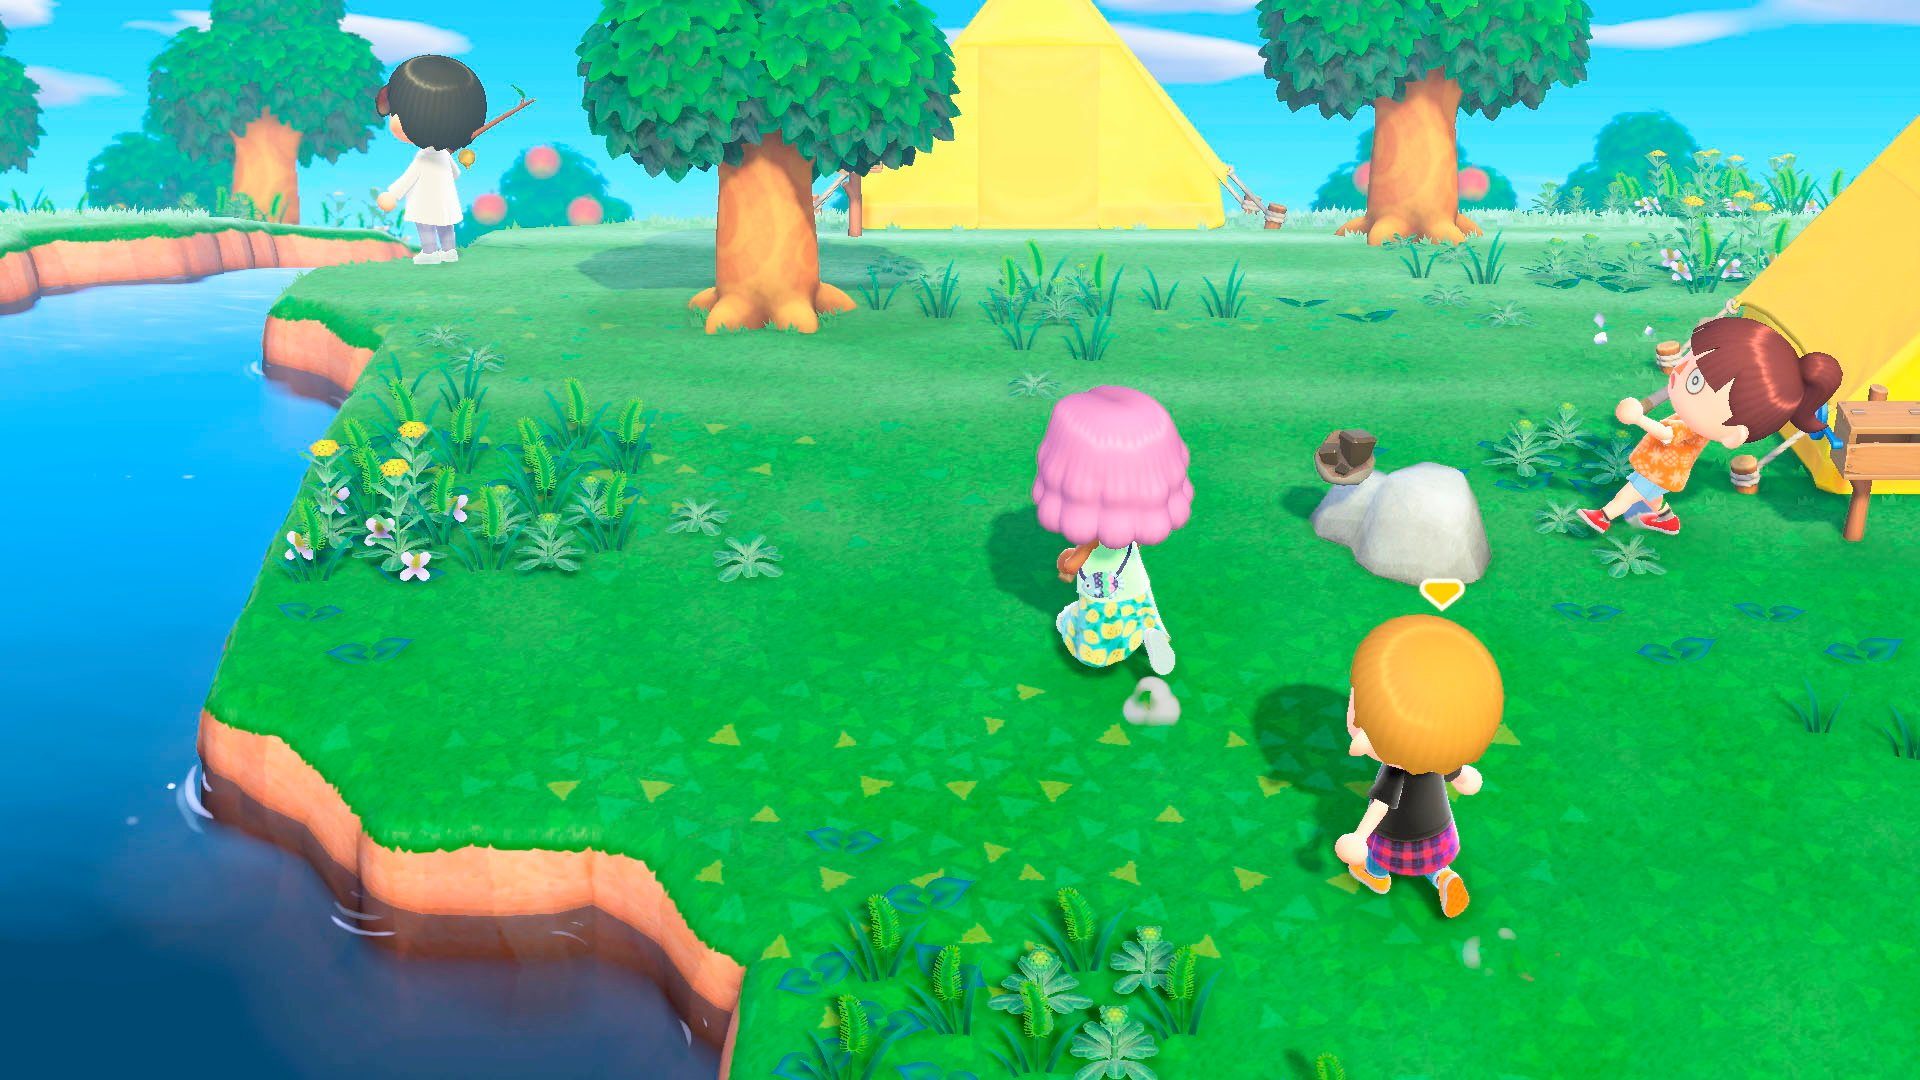 Animal Crossing New Switch Horizons Nintendo